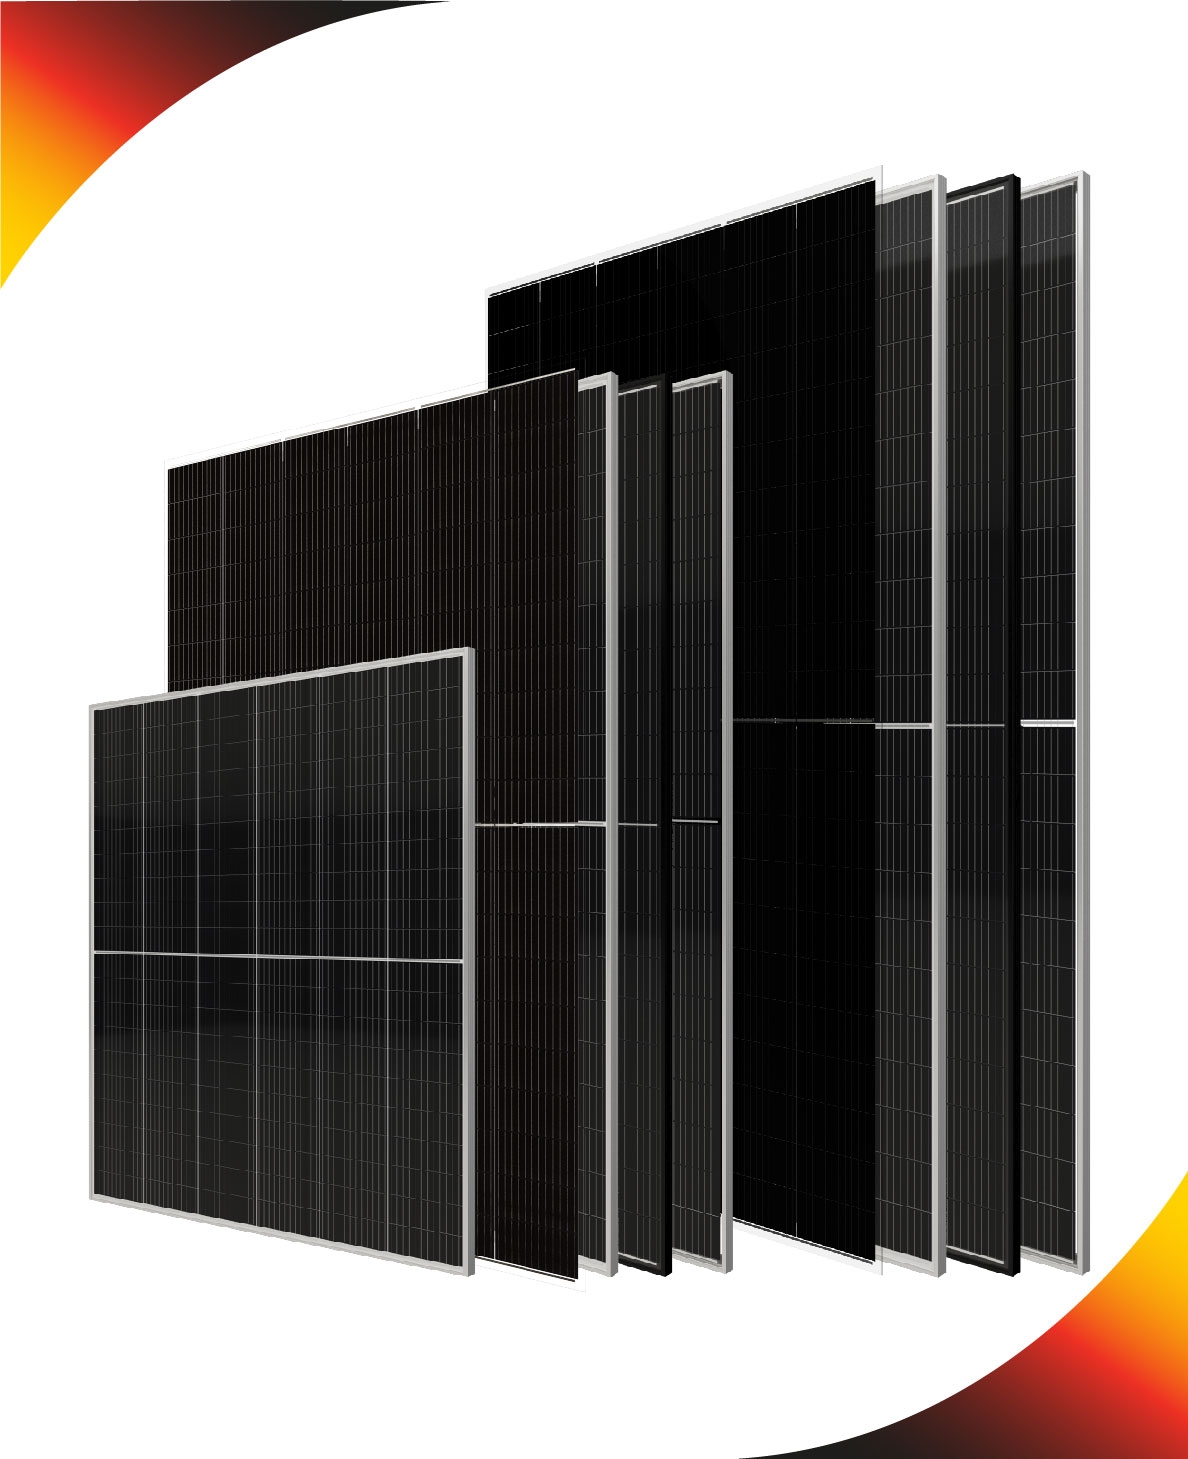 12BB Half-Cut MonoPERC Solar Panels